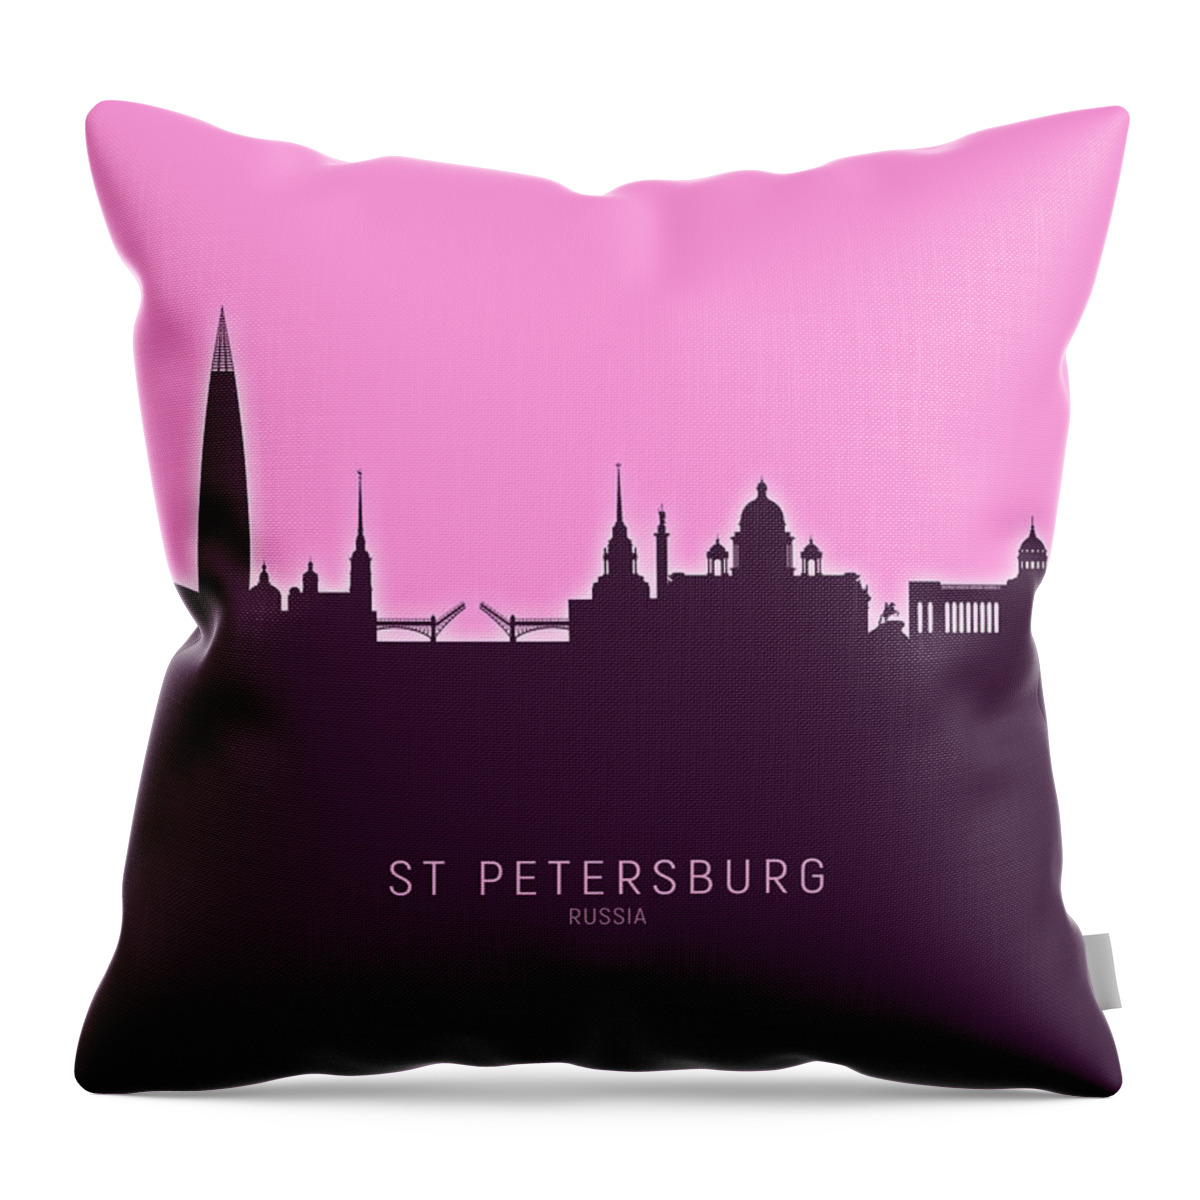 St Petersburg Throw Pillow featuring the digital art St Petersburg Russia Skyline #46 by Michael Tompsett